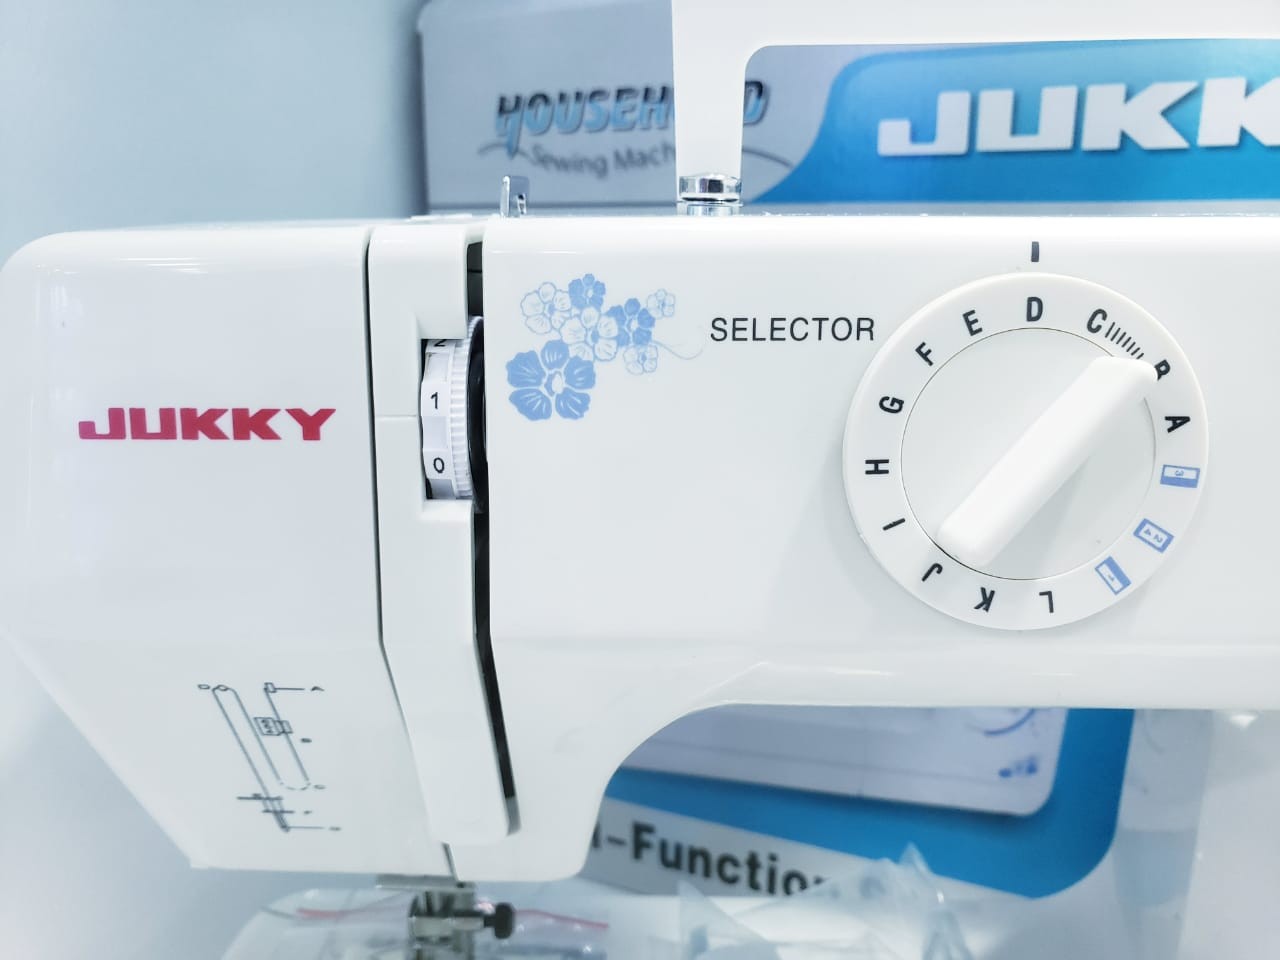 equipos profesionales - Maquina de coser Electrica multifuncional profesional JUKKY FH6224 2